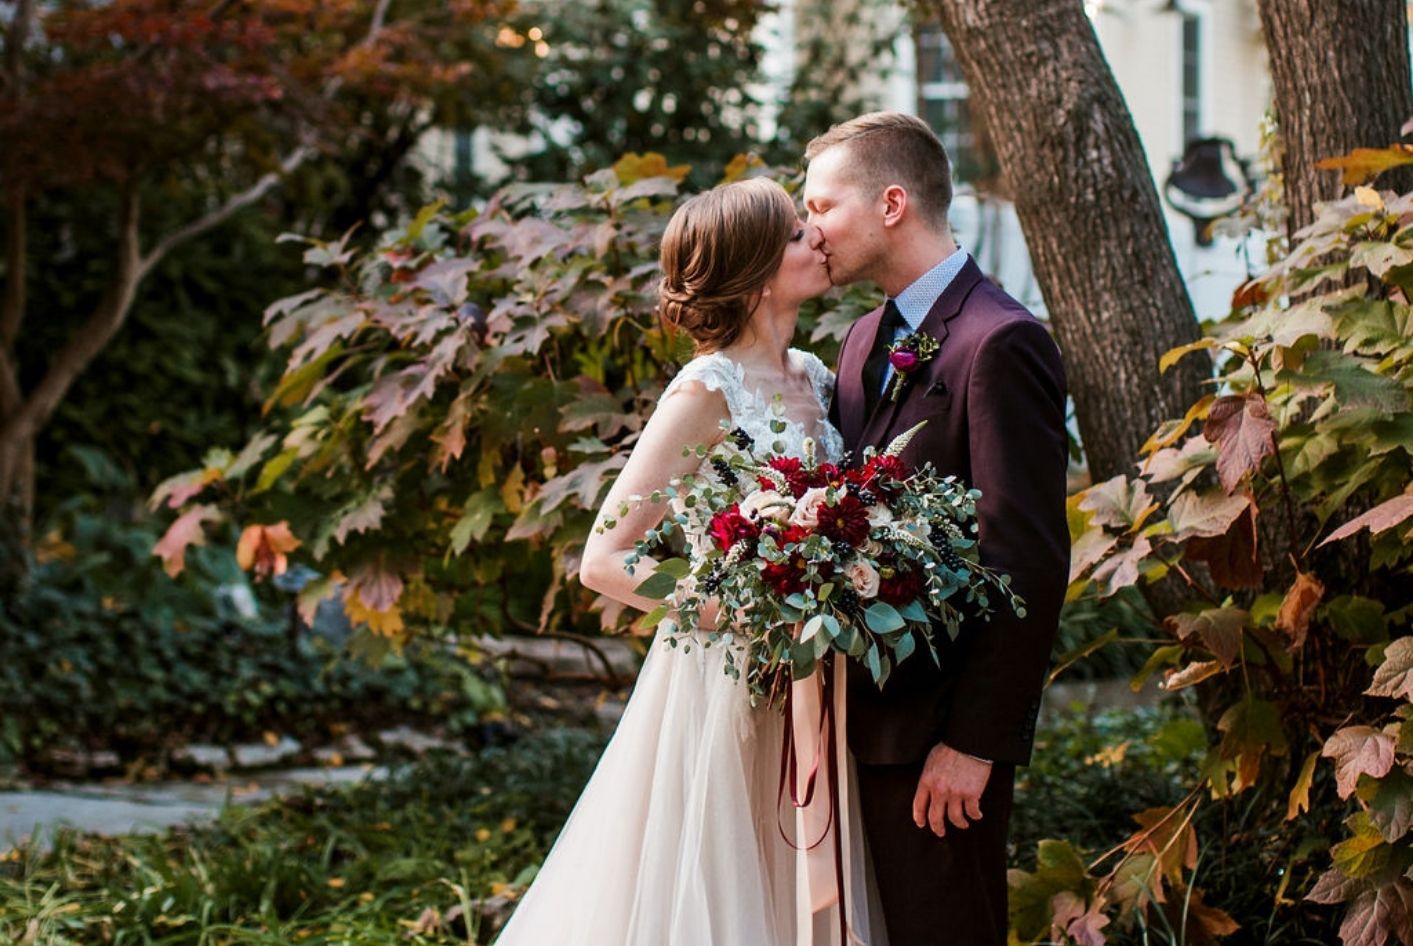 Amanda & Nick’s Rustic Fall Garden Wedding | November 8